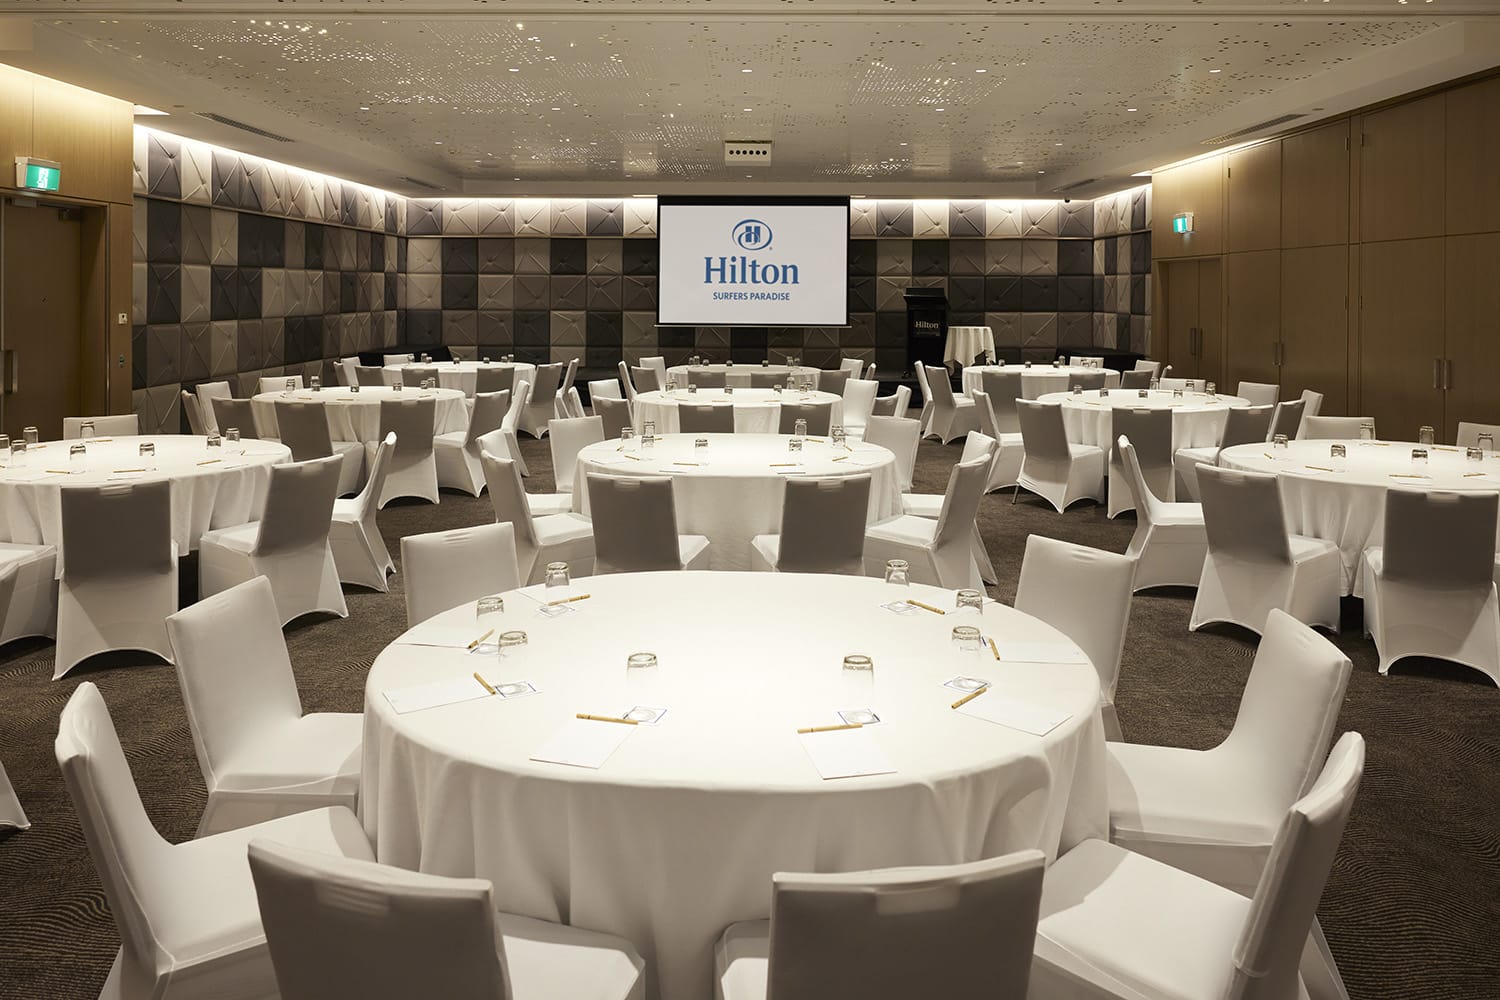 The Hilton Grand Ballroom Conference Room on the Gold Coast